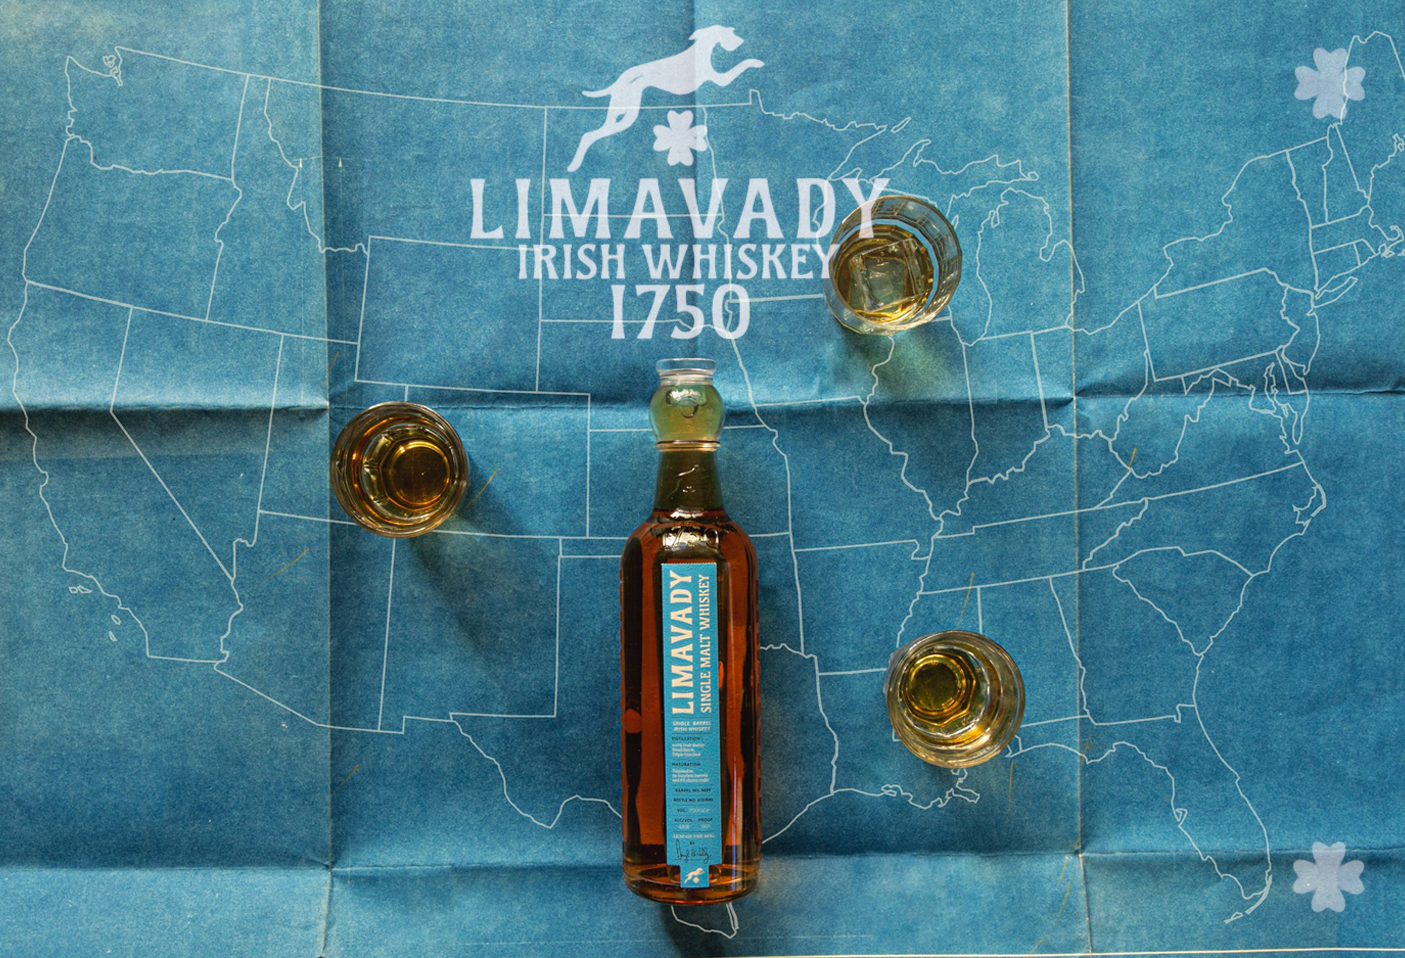 limavady-whiskey-irish-whisky-leaping-dog-doggo-clover-branding-brand-logo-vacaliebres-usa-